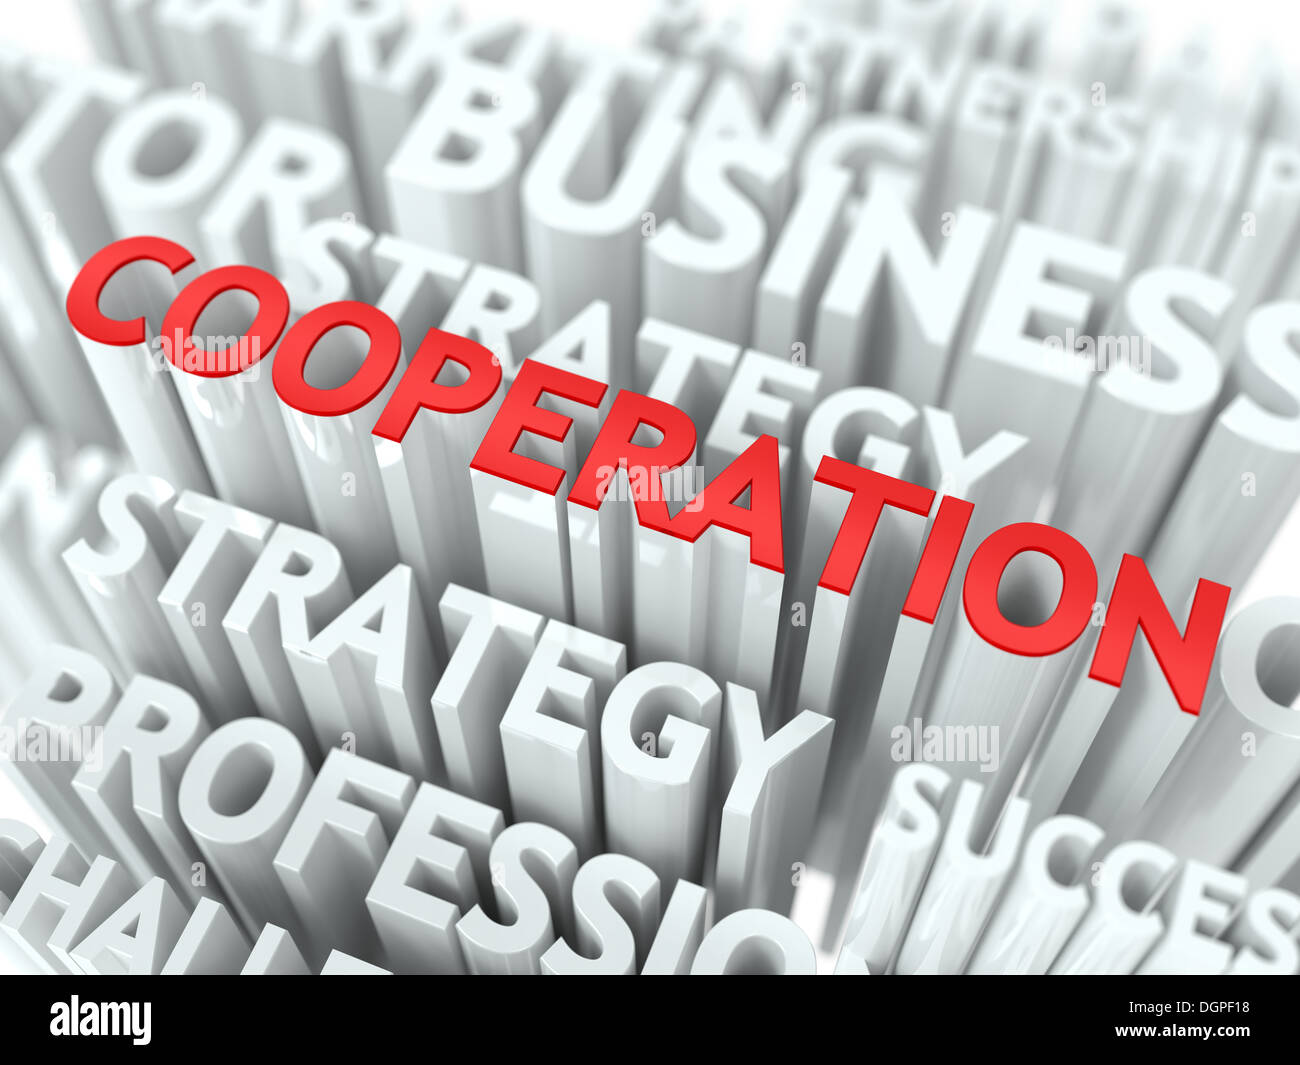 Cooperation Concept. Stock Photo